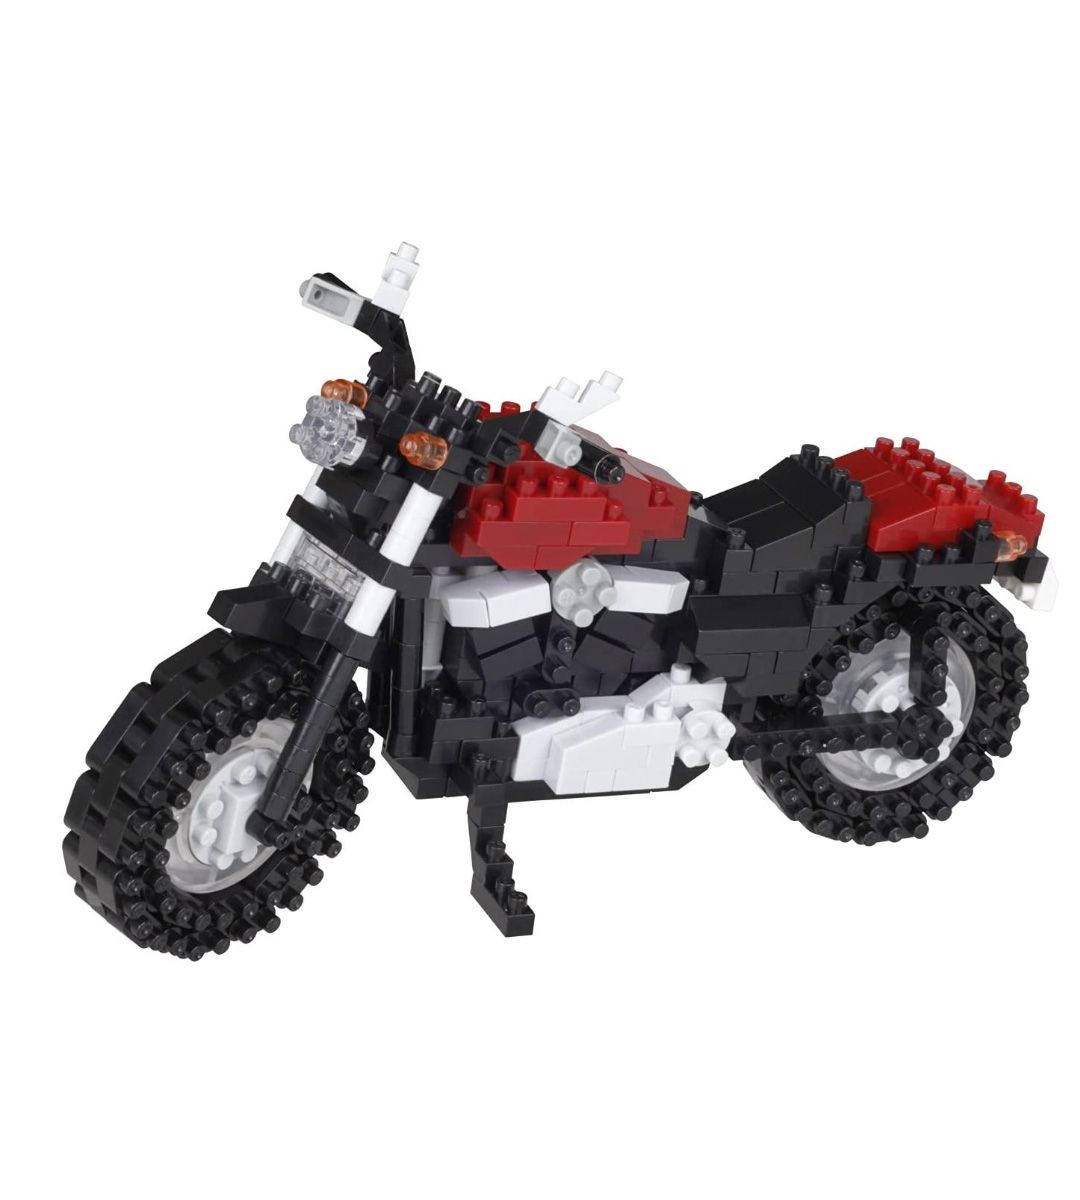 Nanoblock - Motorcycle - NBH 219